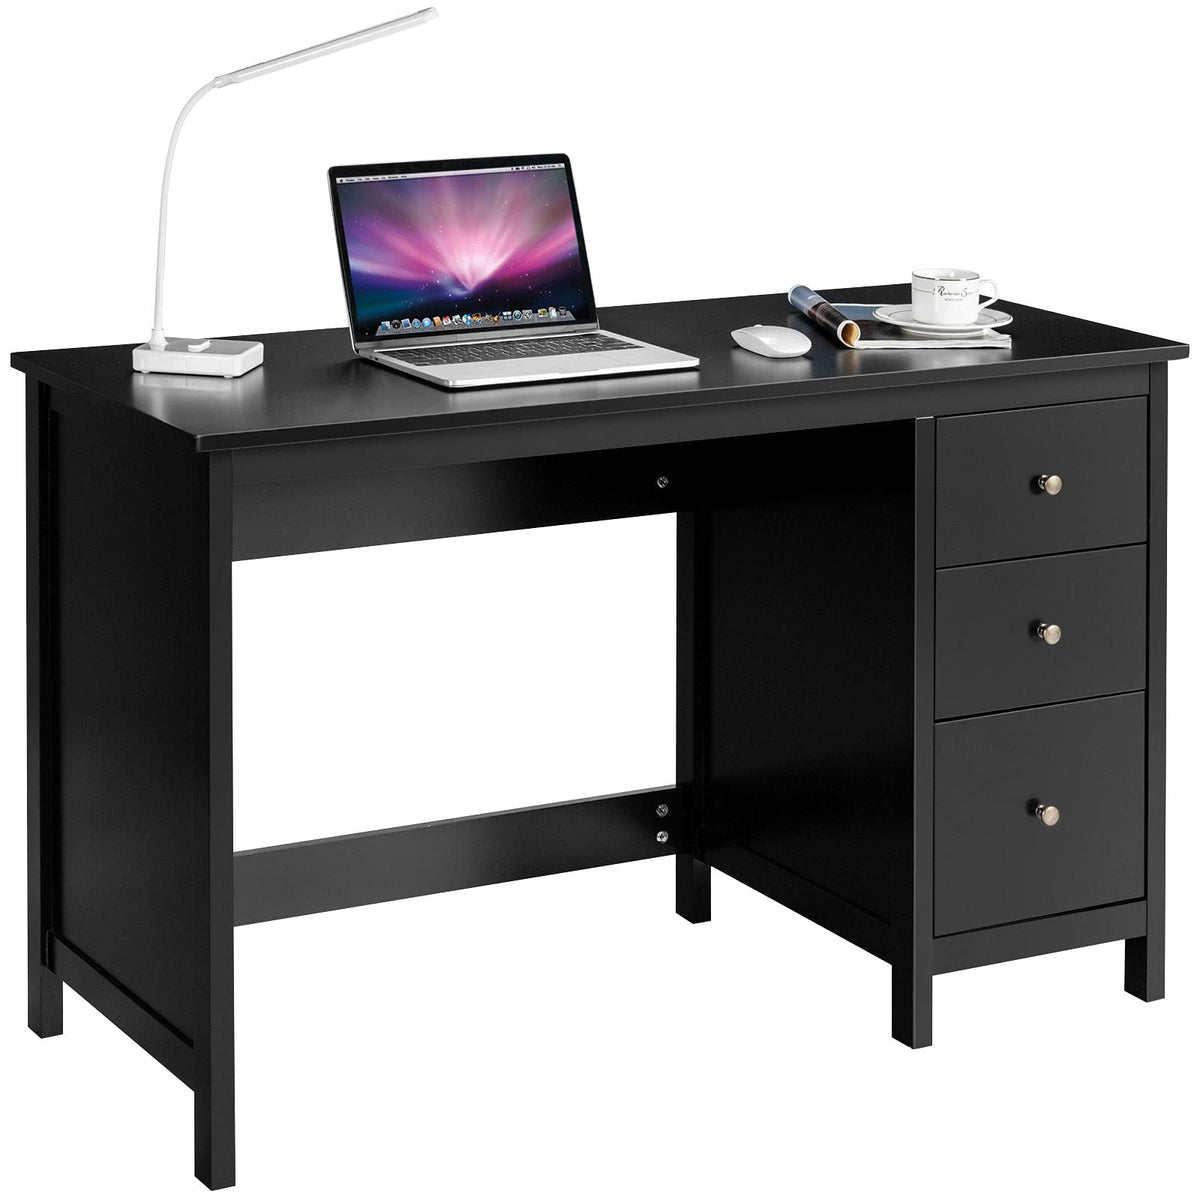 Giantex 3-Drawer Computer Desk, Multipurpose Study Desk w/Spacious Desktop (Black)